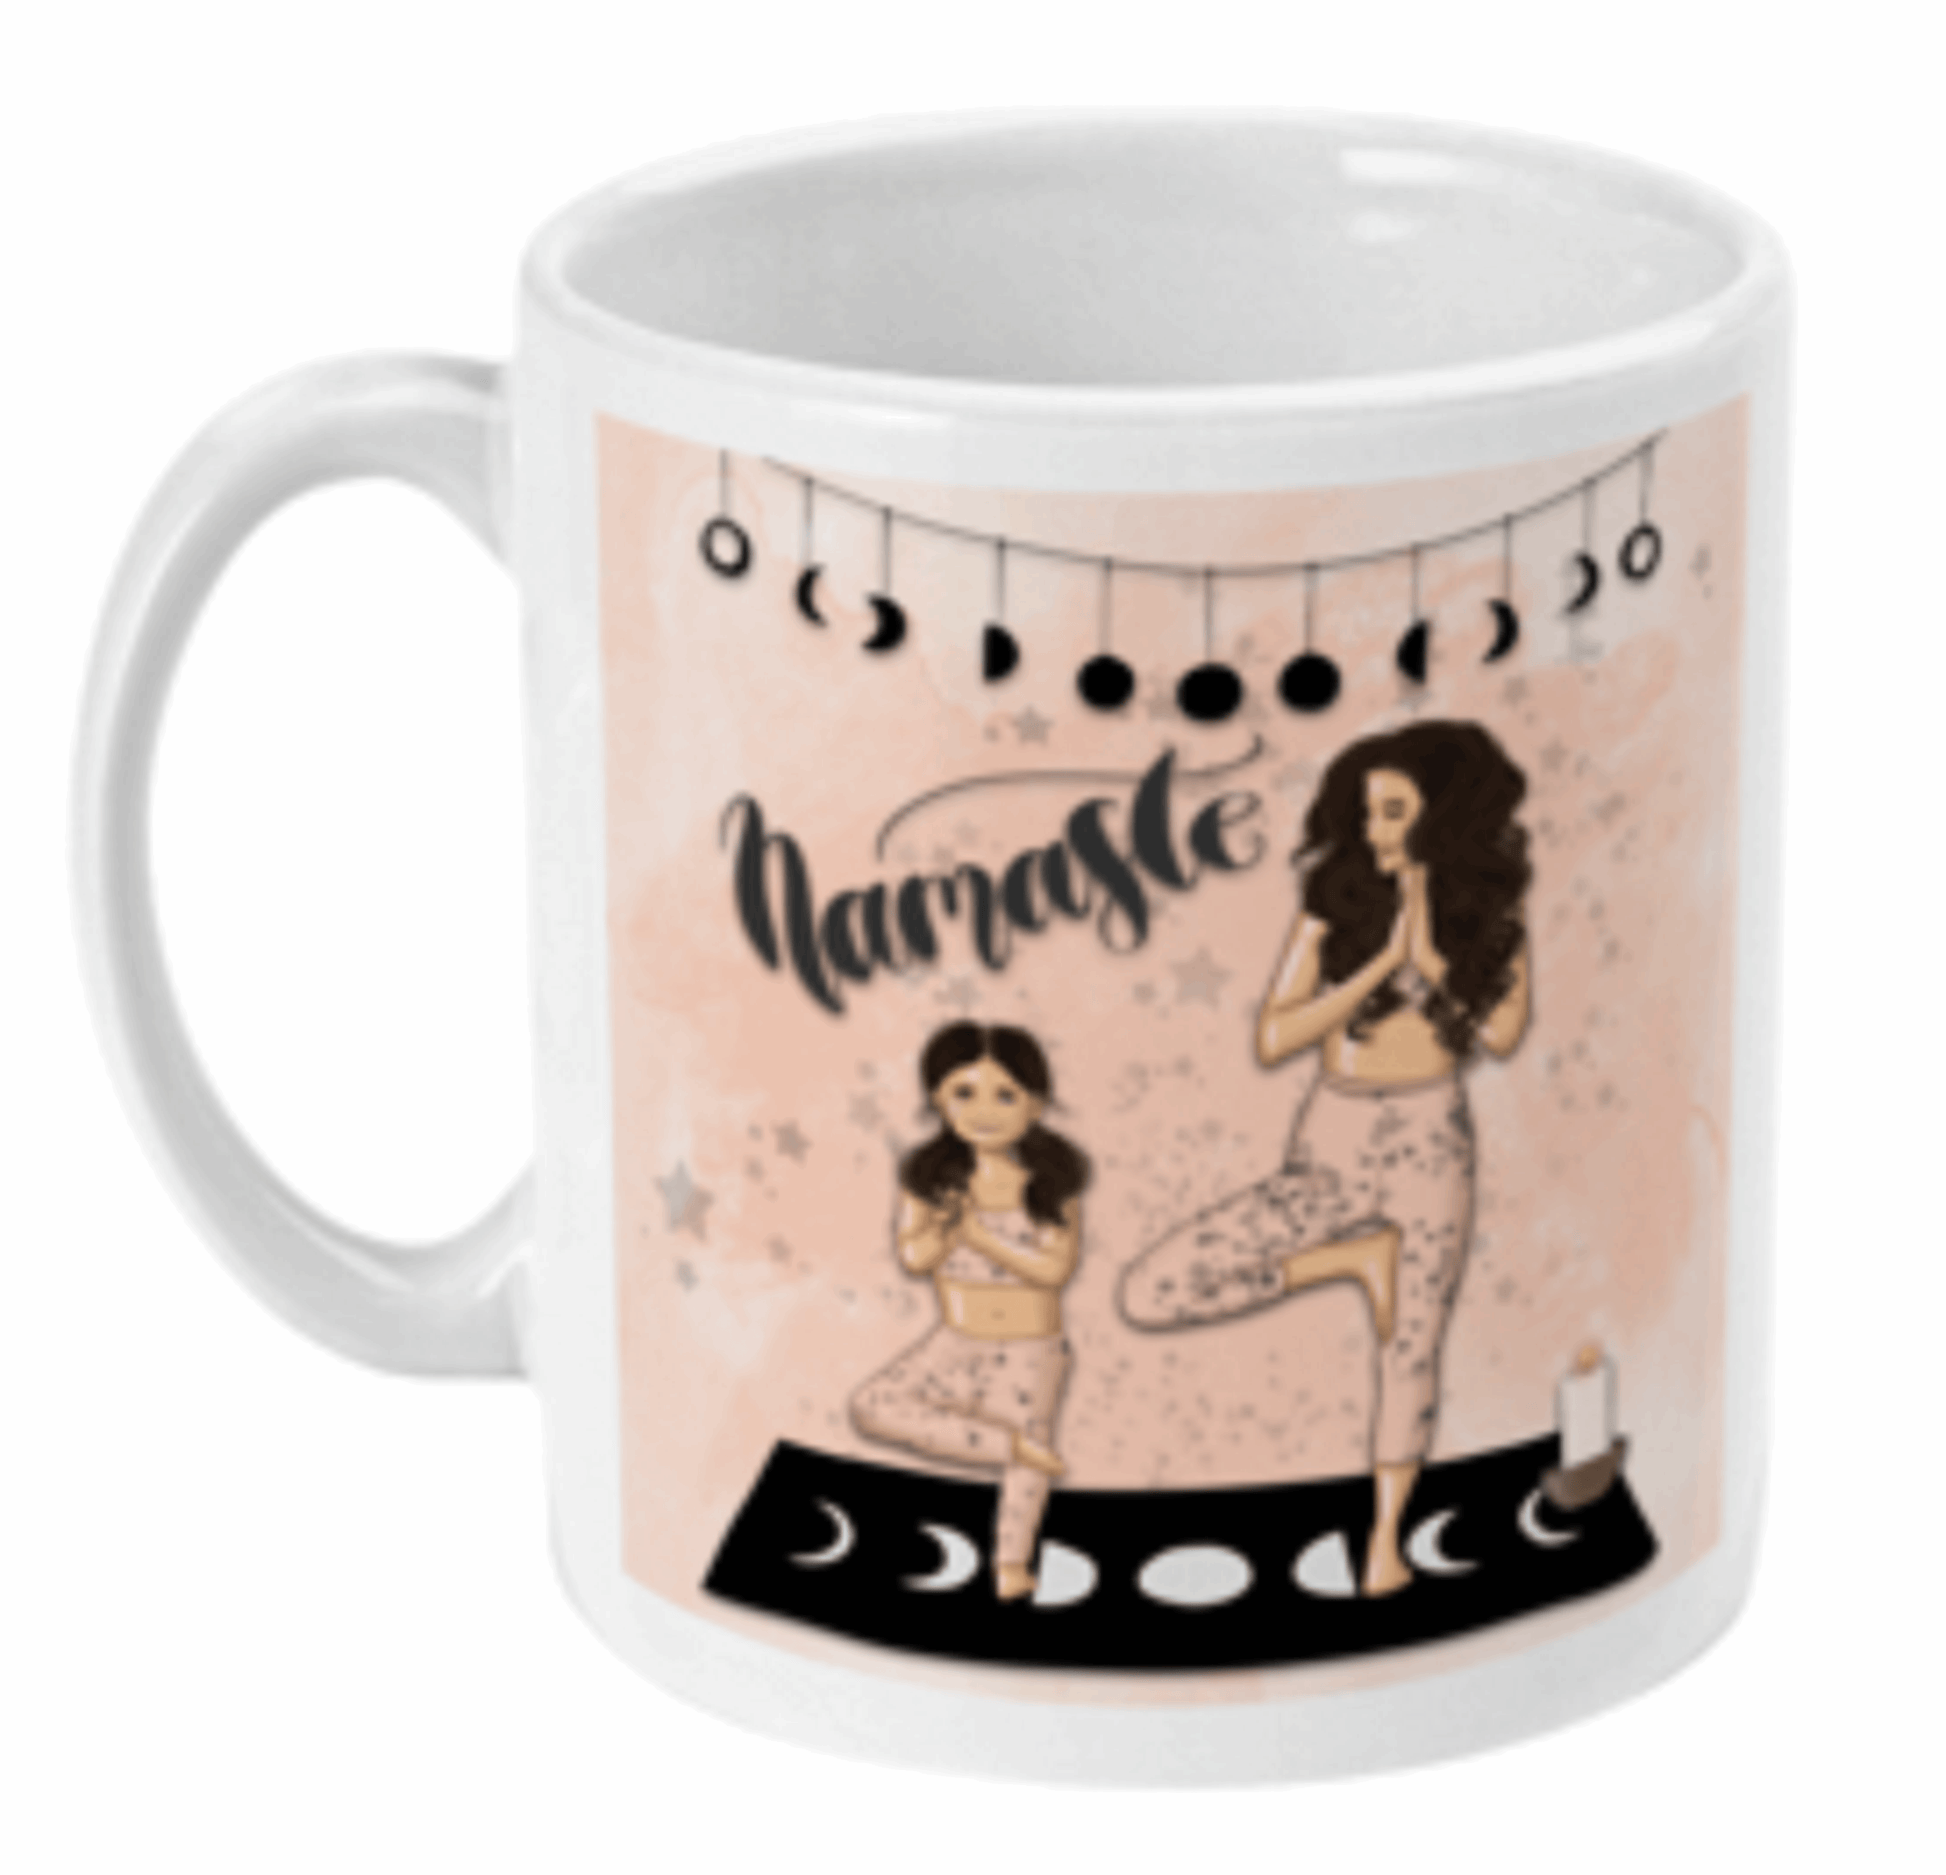  Namaste Yoga Coffee or Tea Mug by Free Spirit Accessories sold by Free Spirit Accessories